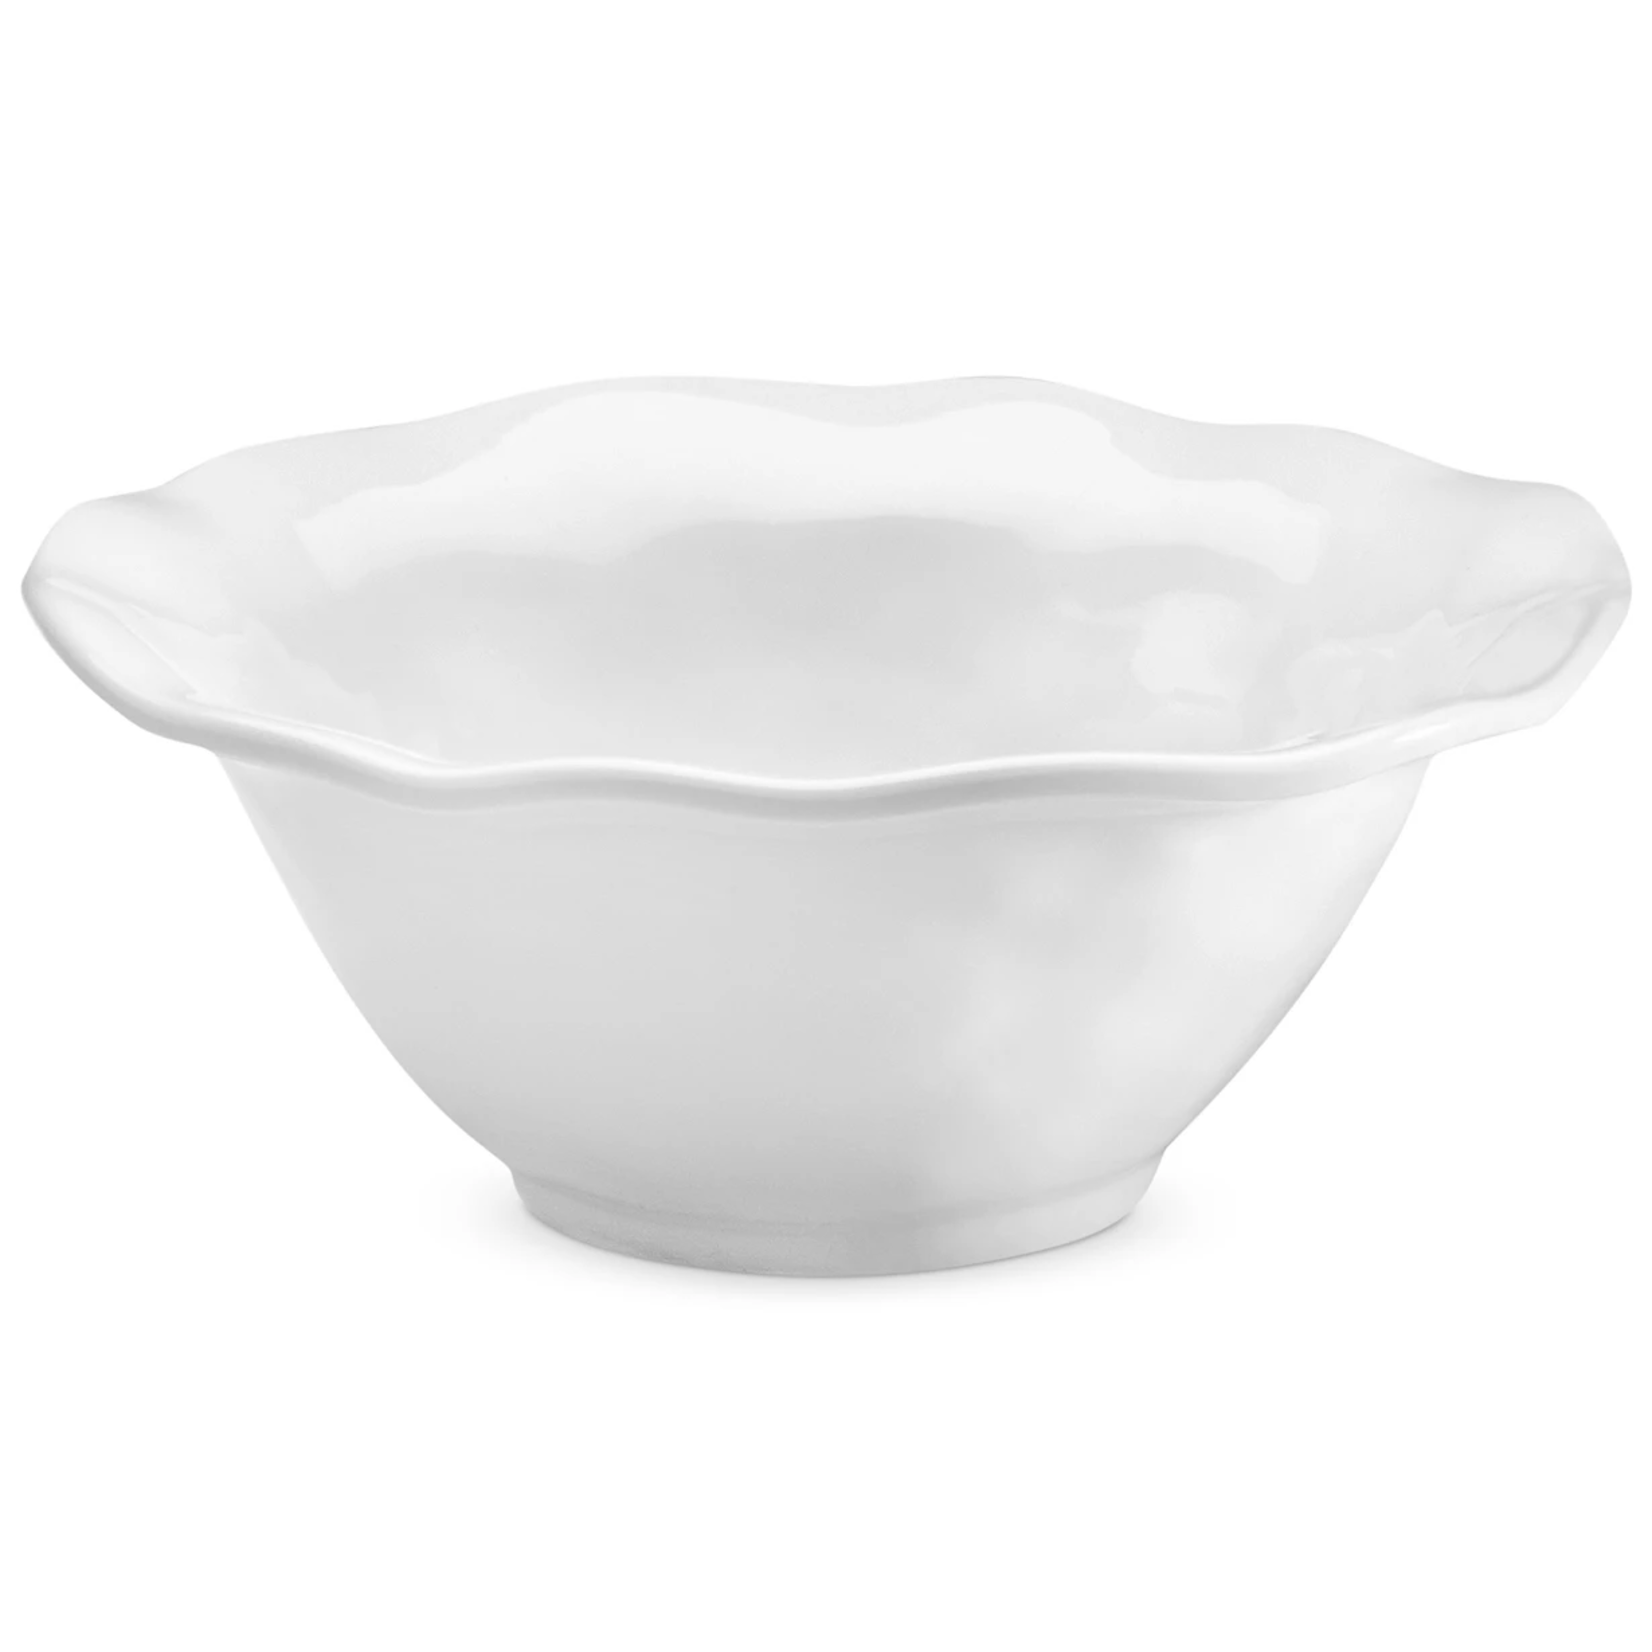 Melamine Ruffle White Round Cereal Bowl